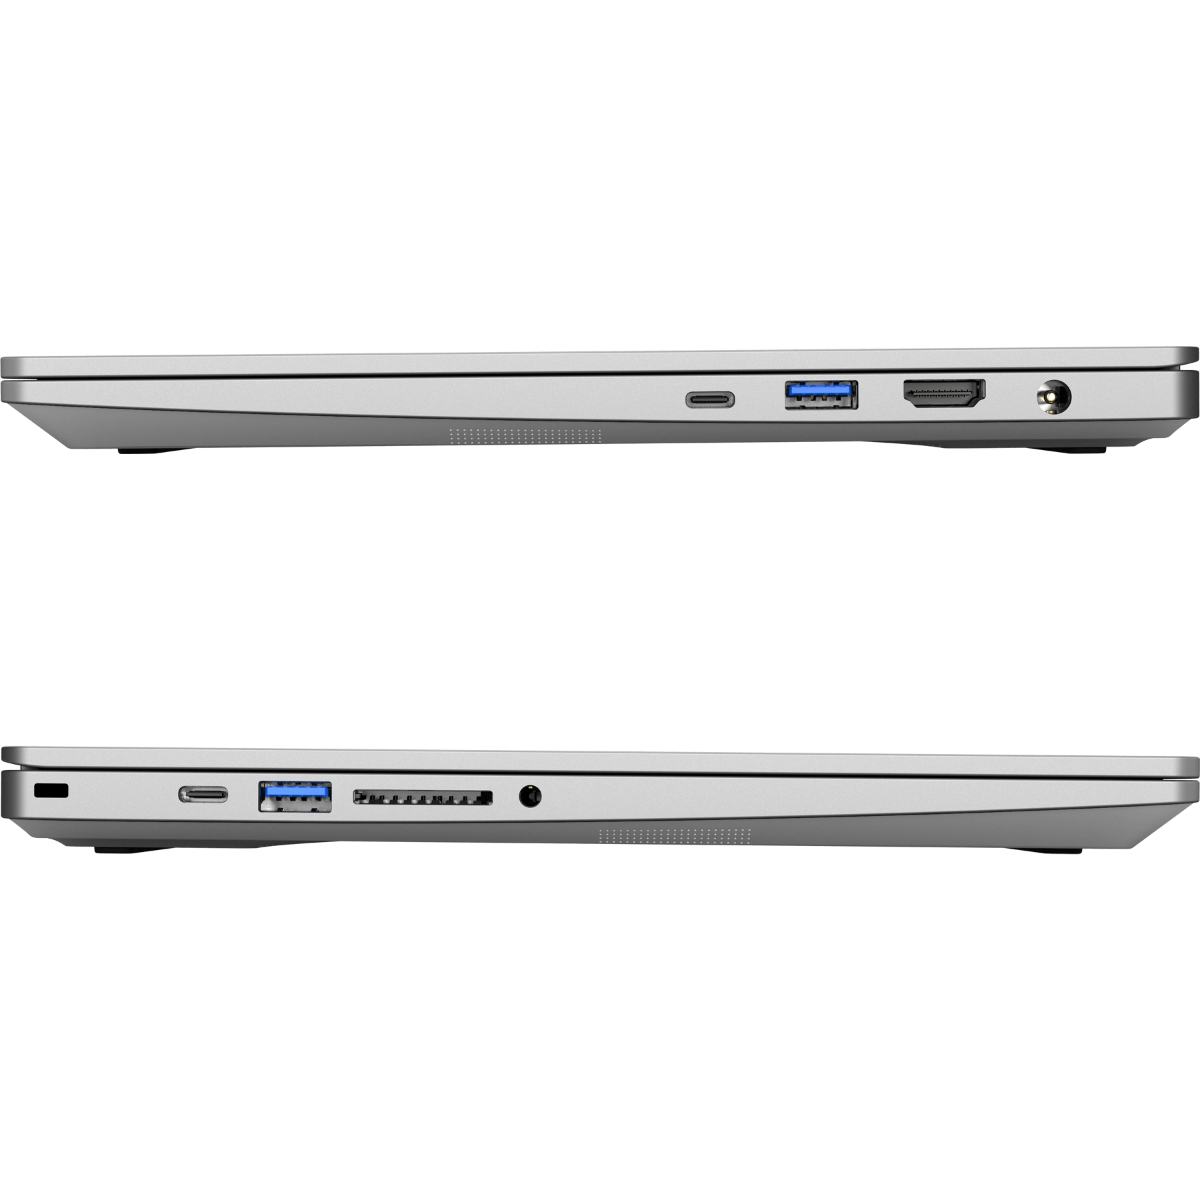 SCHENKER VISION 14 - M23fjp, mit GB RAM, Intel® Ultrabook Prozessor, Silber i7 SSD, GB Core™ Zoll 14,0 1000 32 Display